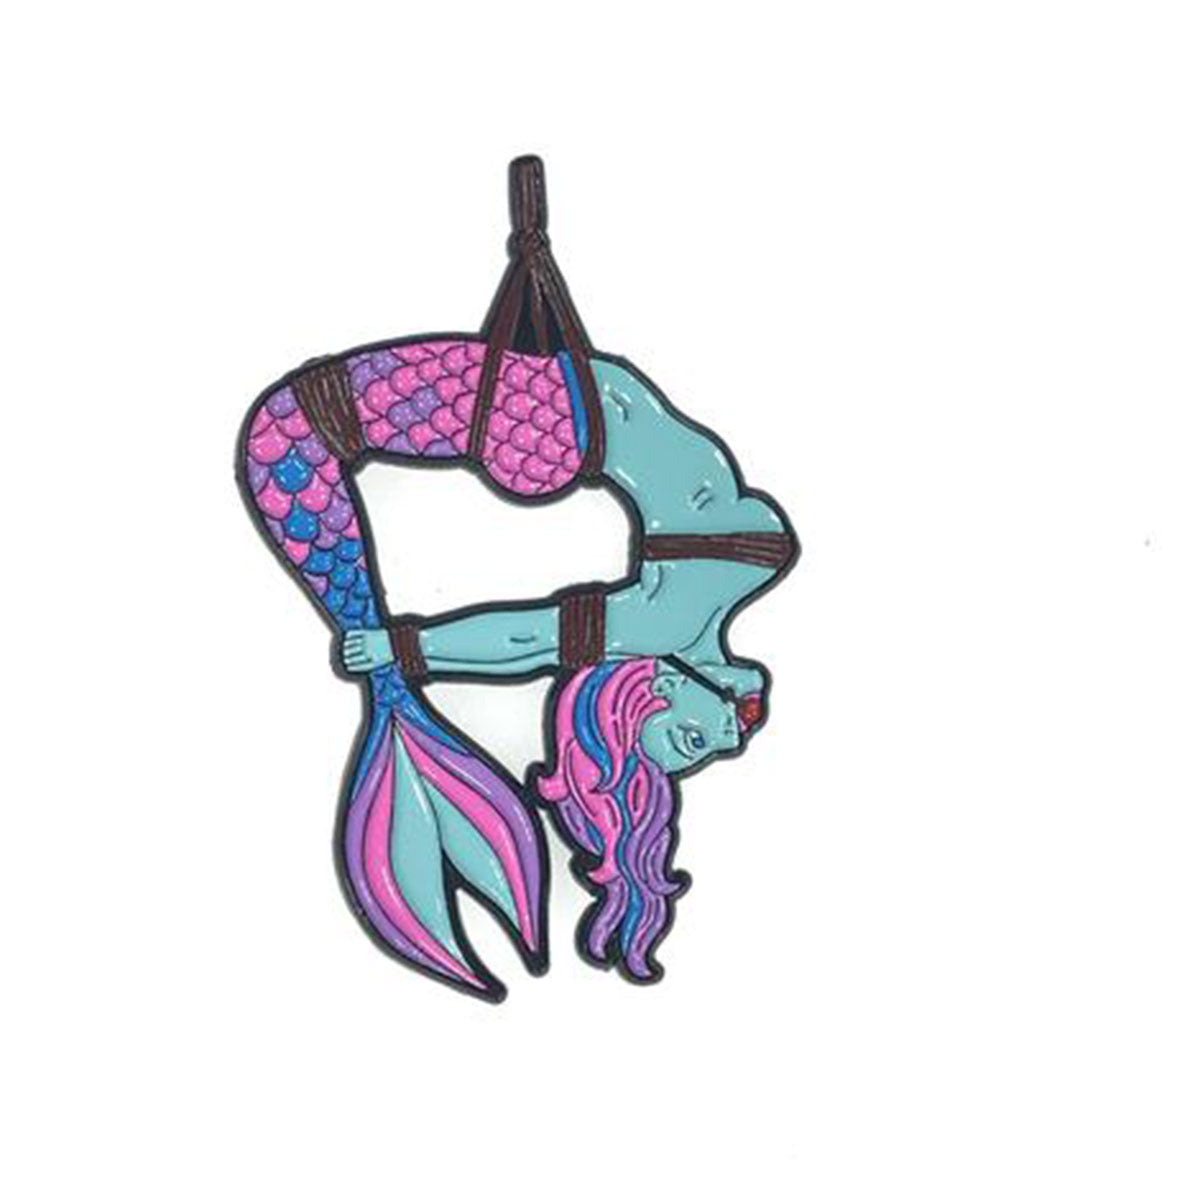 Geeky & Kinky Mermaid Pin - Aqua/Purple